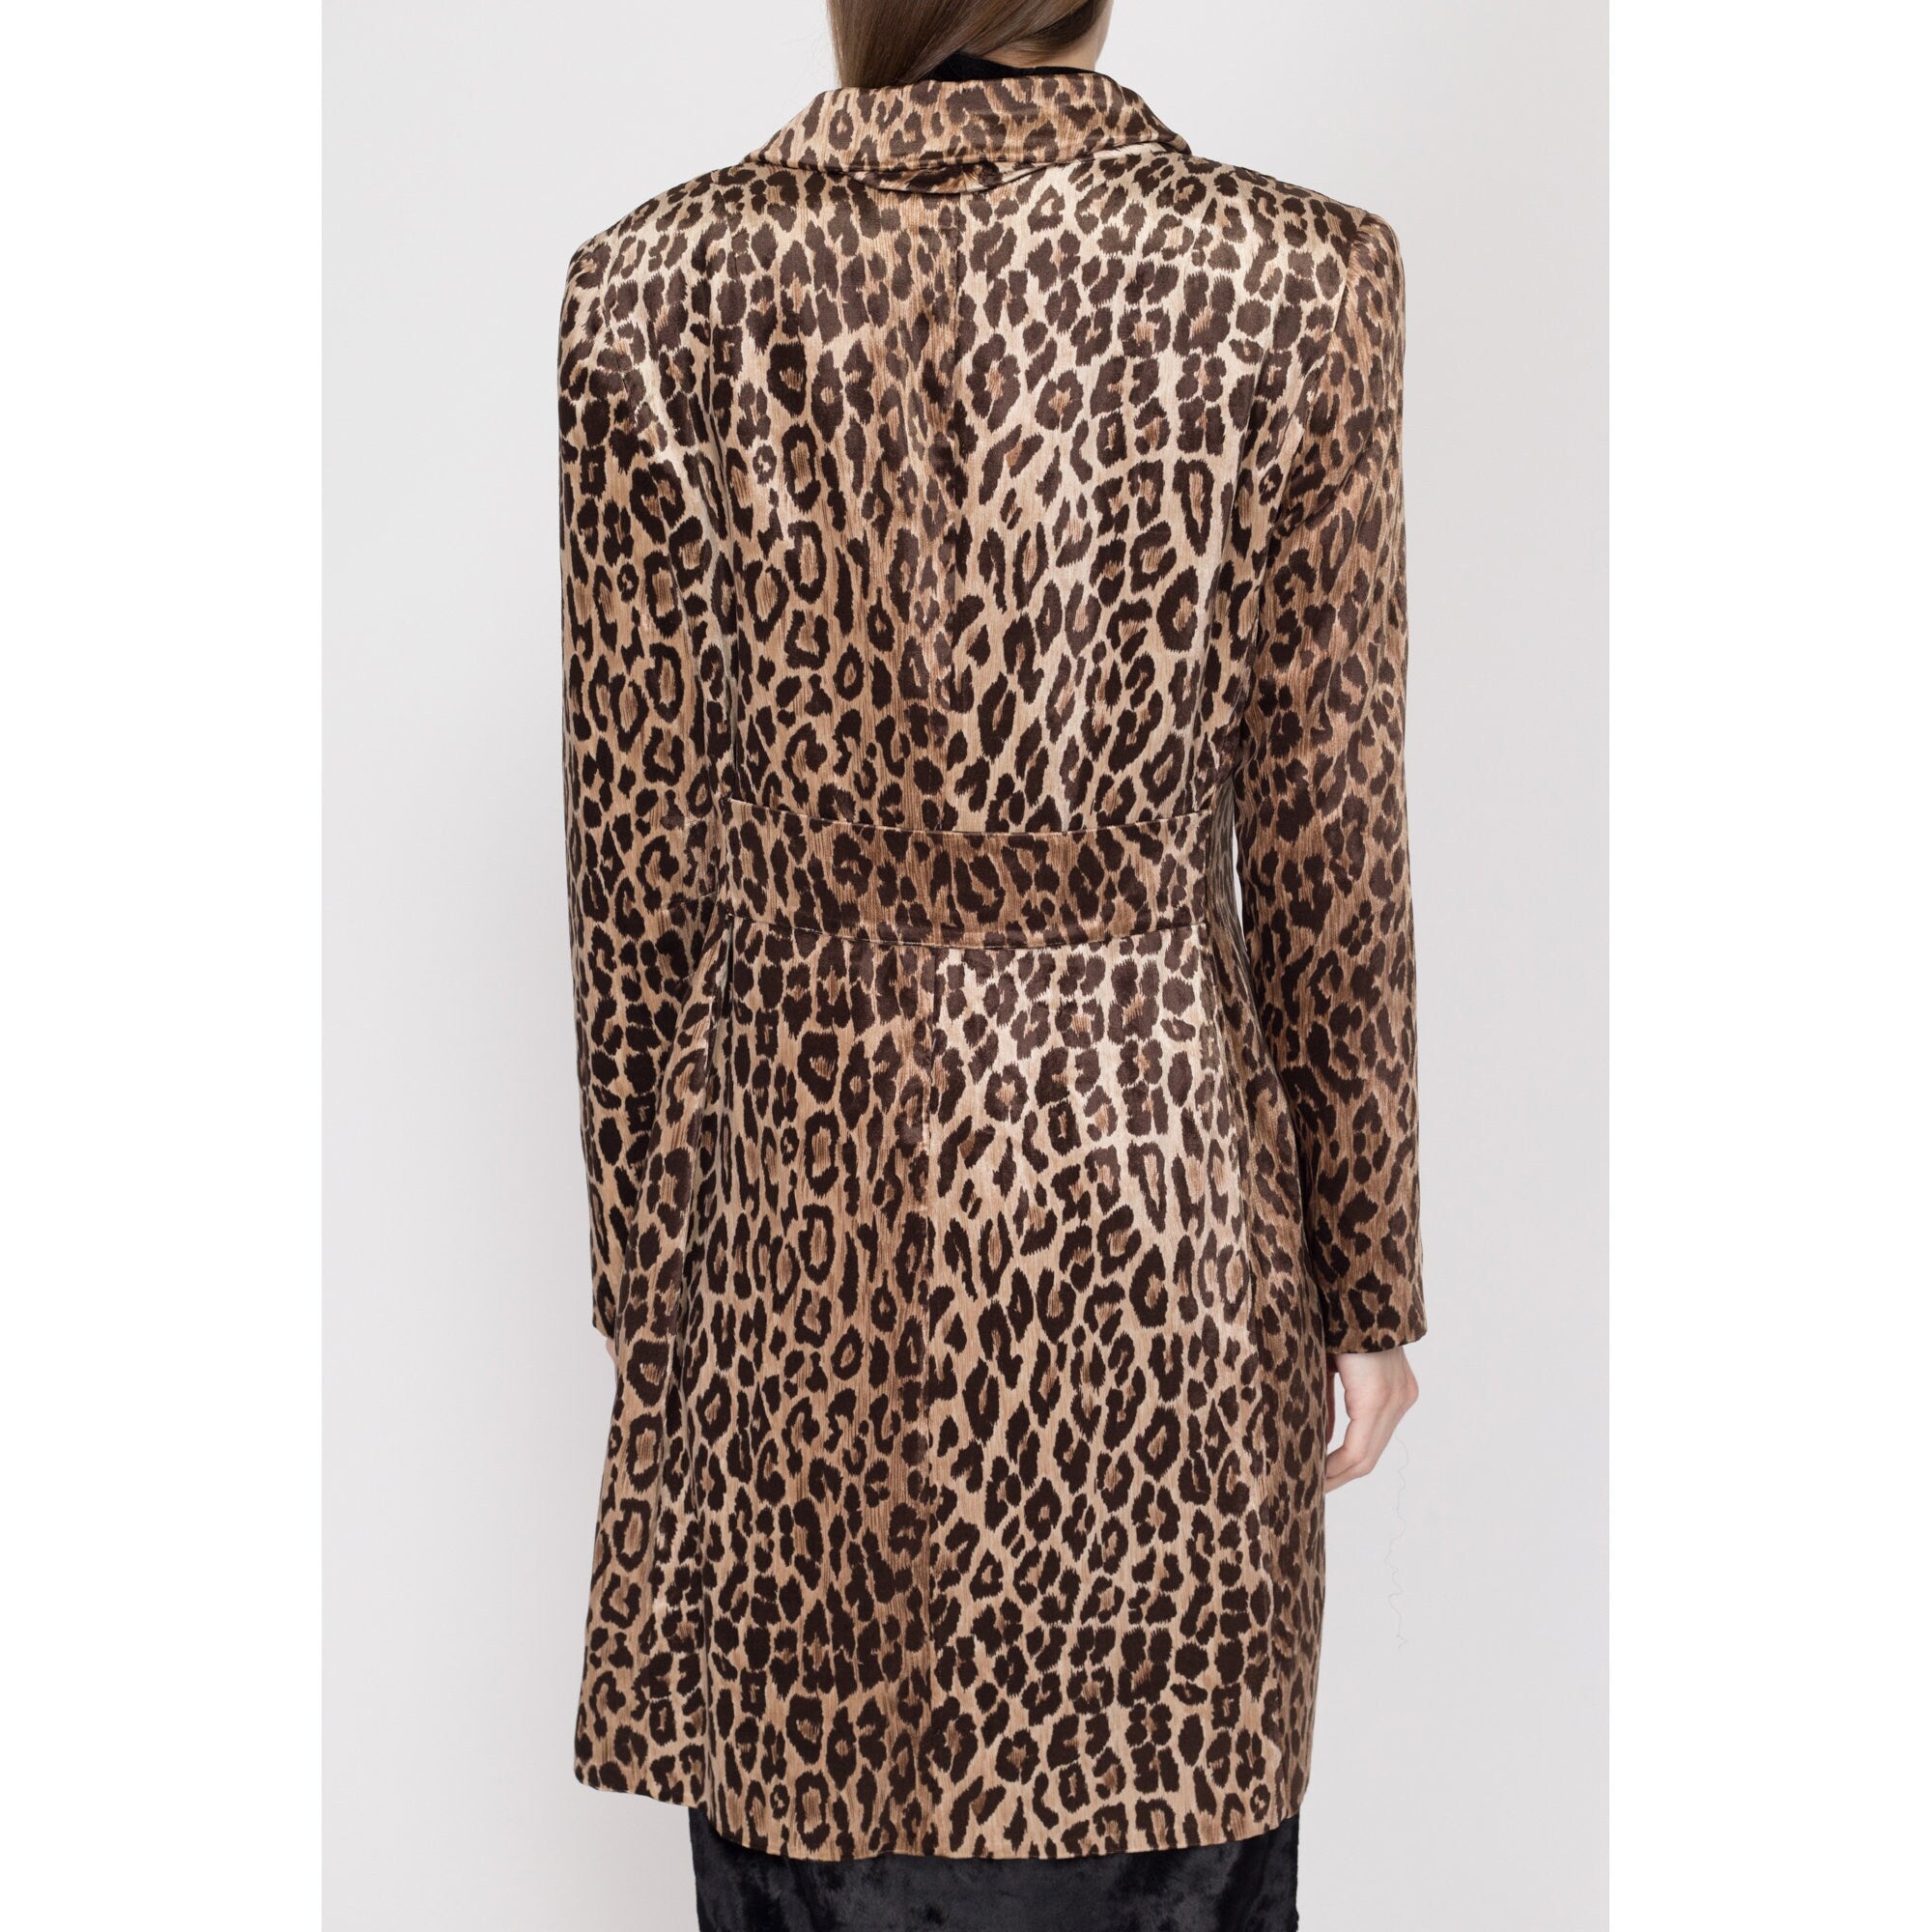 Medium 90s Dolce & Gabbana Leopard Print Velvet Jacket